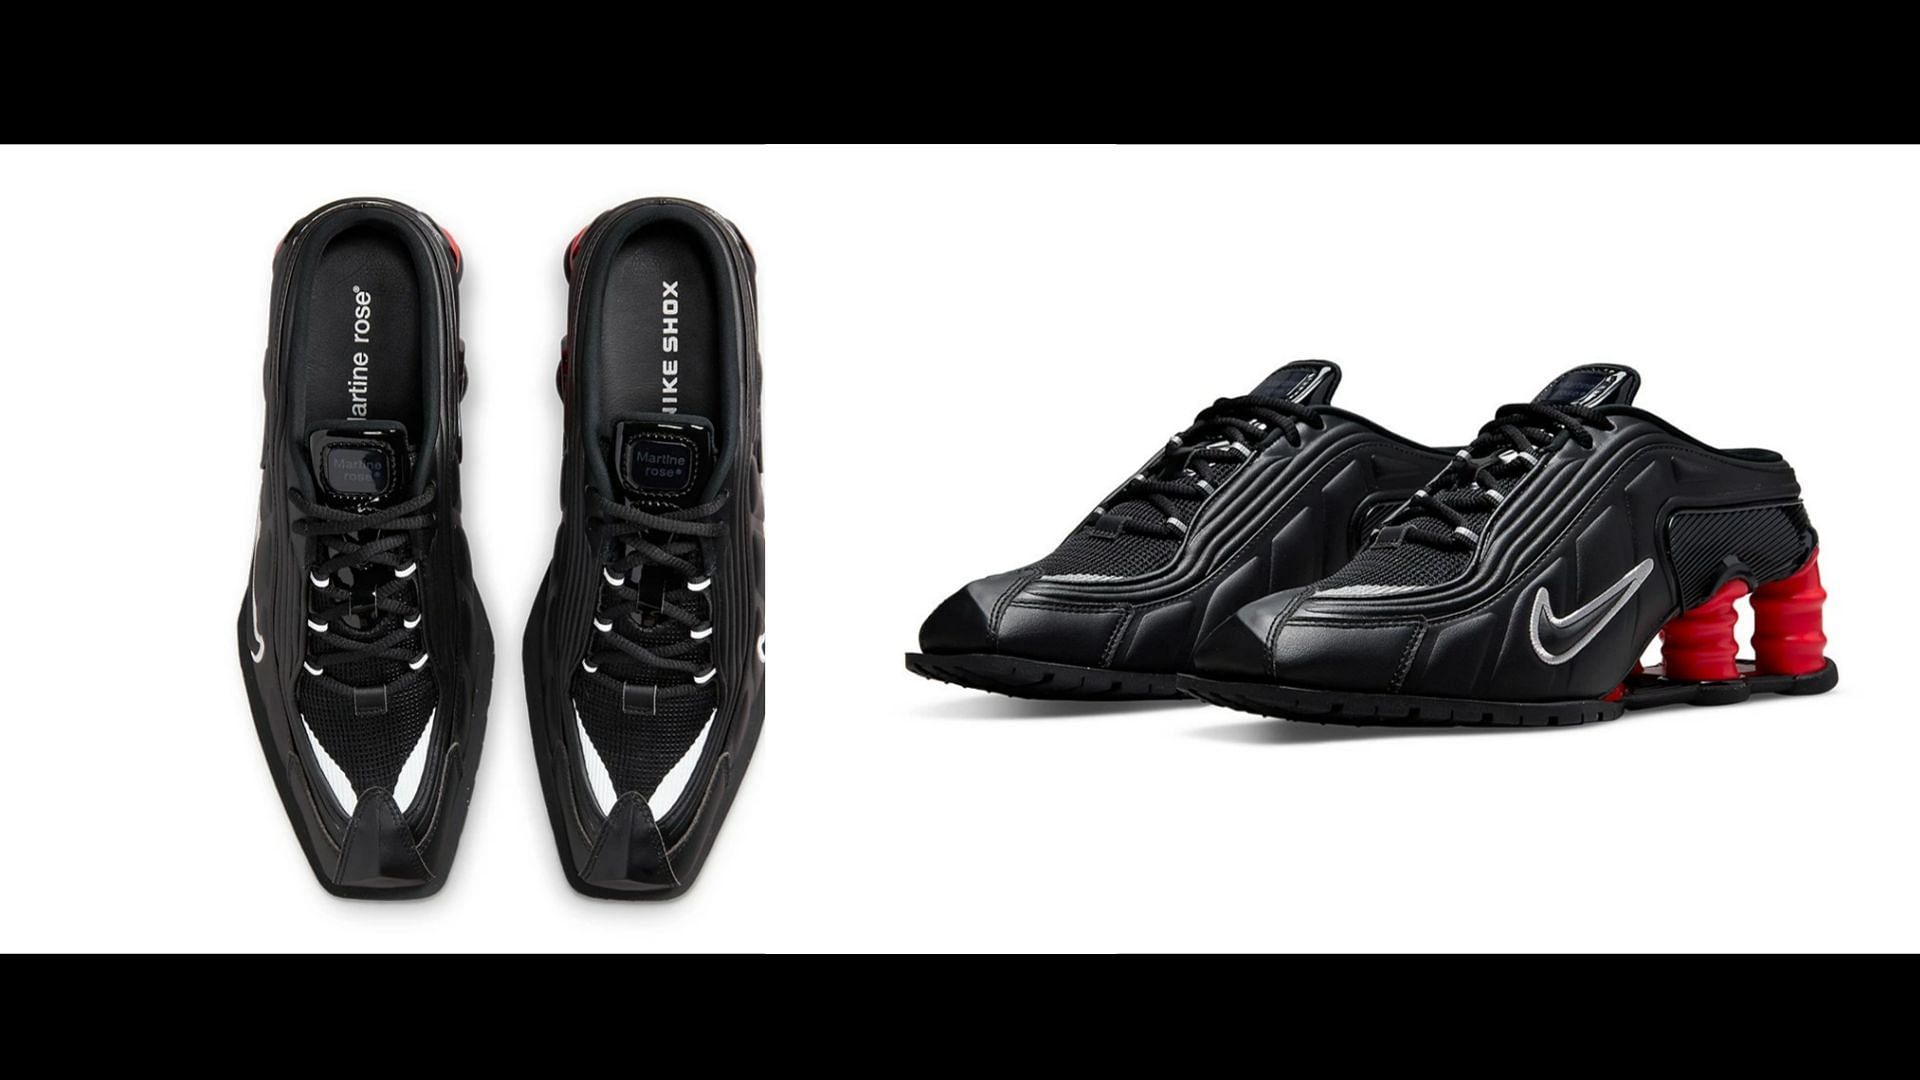 Upcoming Martin Rose x Nike Shox MR4 black colorway (Image via Nike)